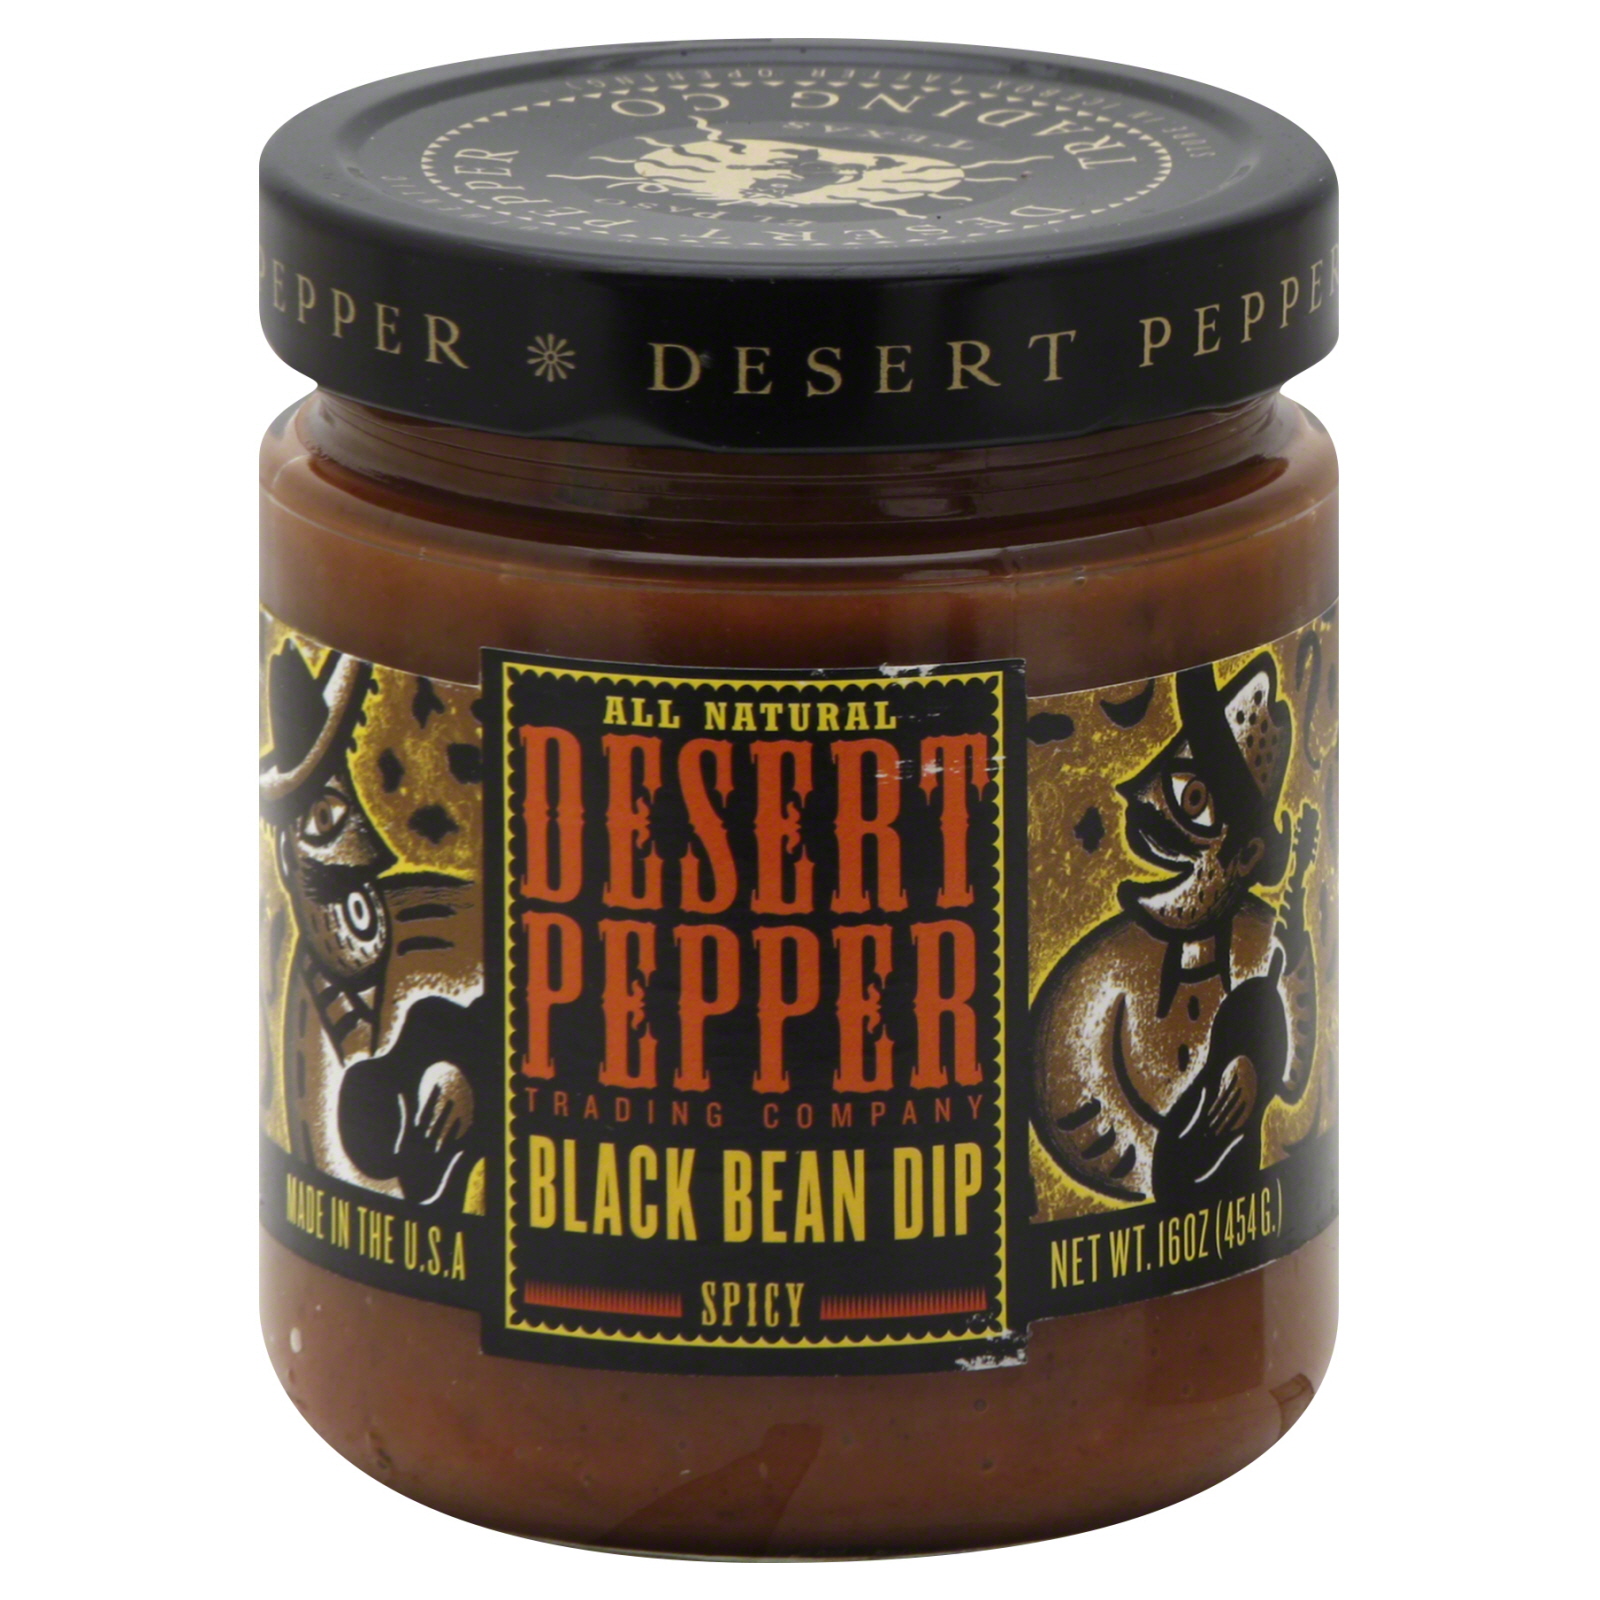 Desert Pepper Black Bean Dip, Fat Free, Spicy, 16 oz (454 g)